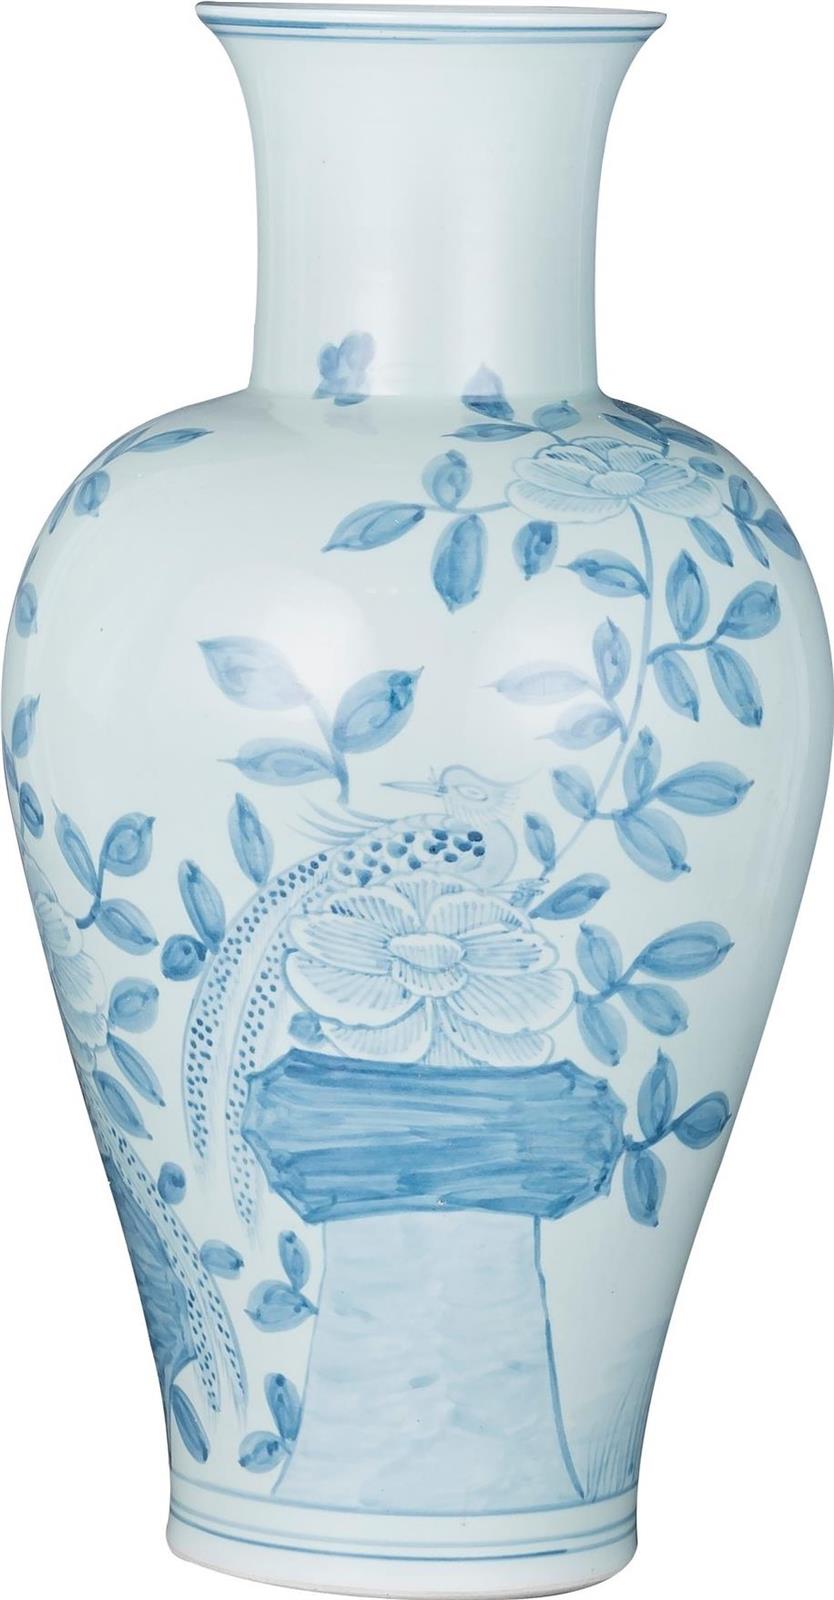 Vase Pheasant Flower Stool Blue White Ceramic Handmade Hand-Crafted-Image 3